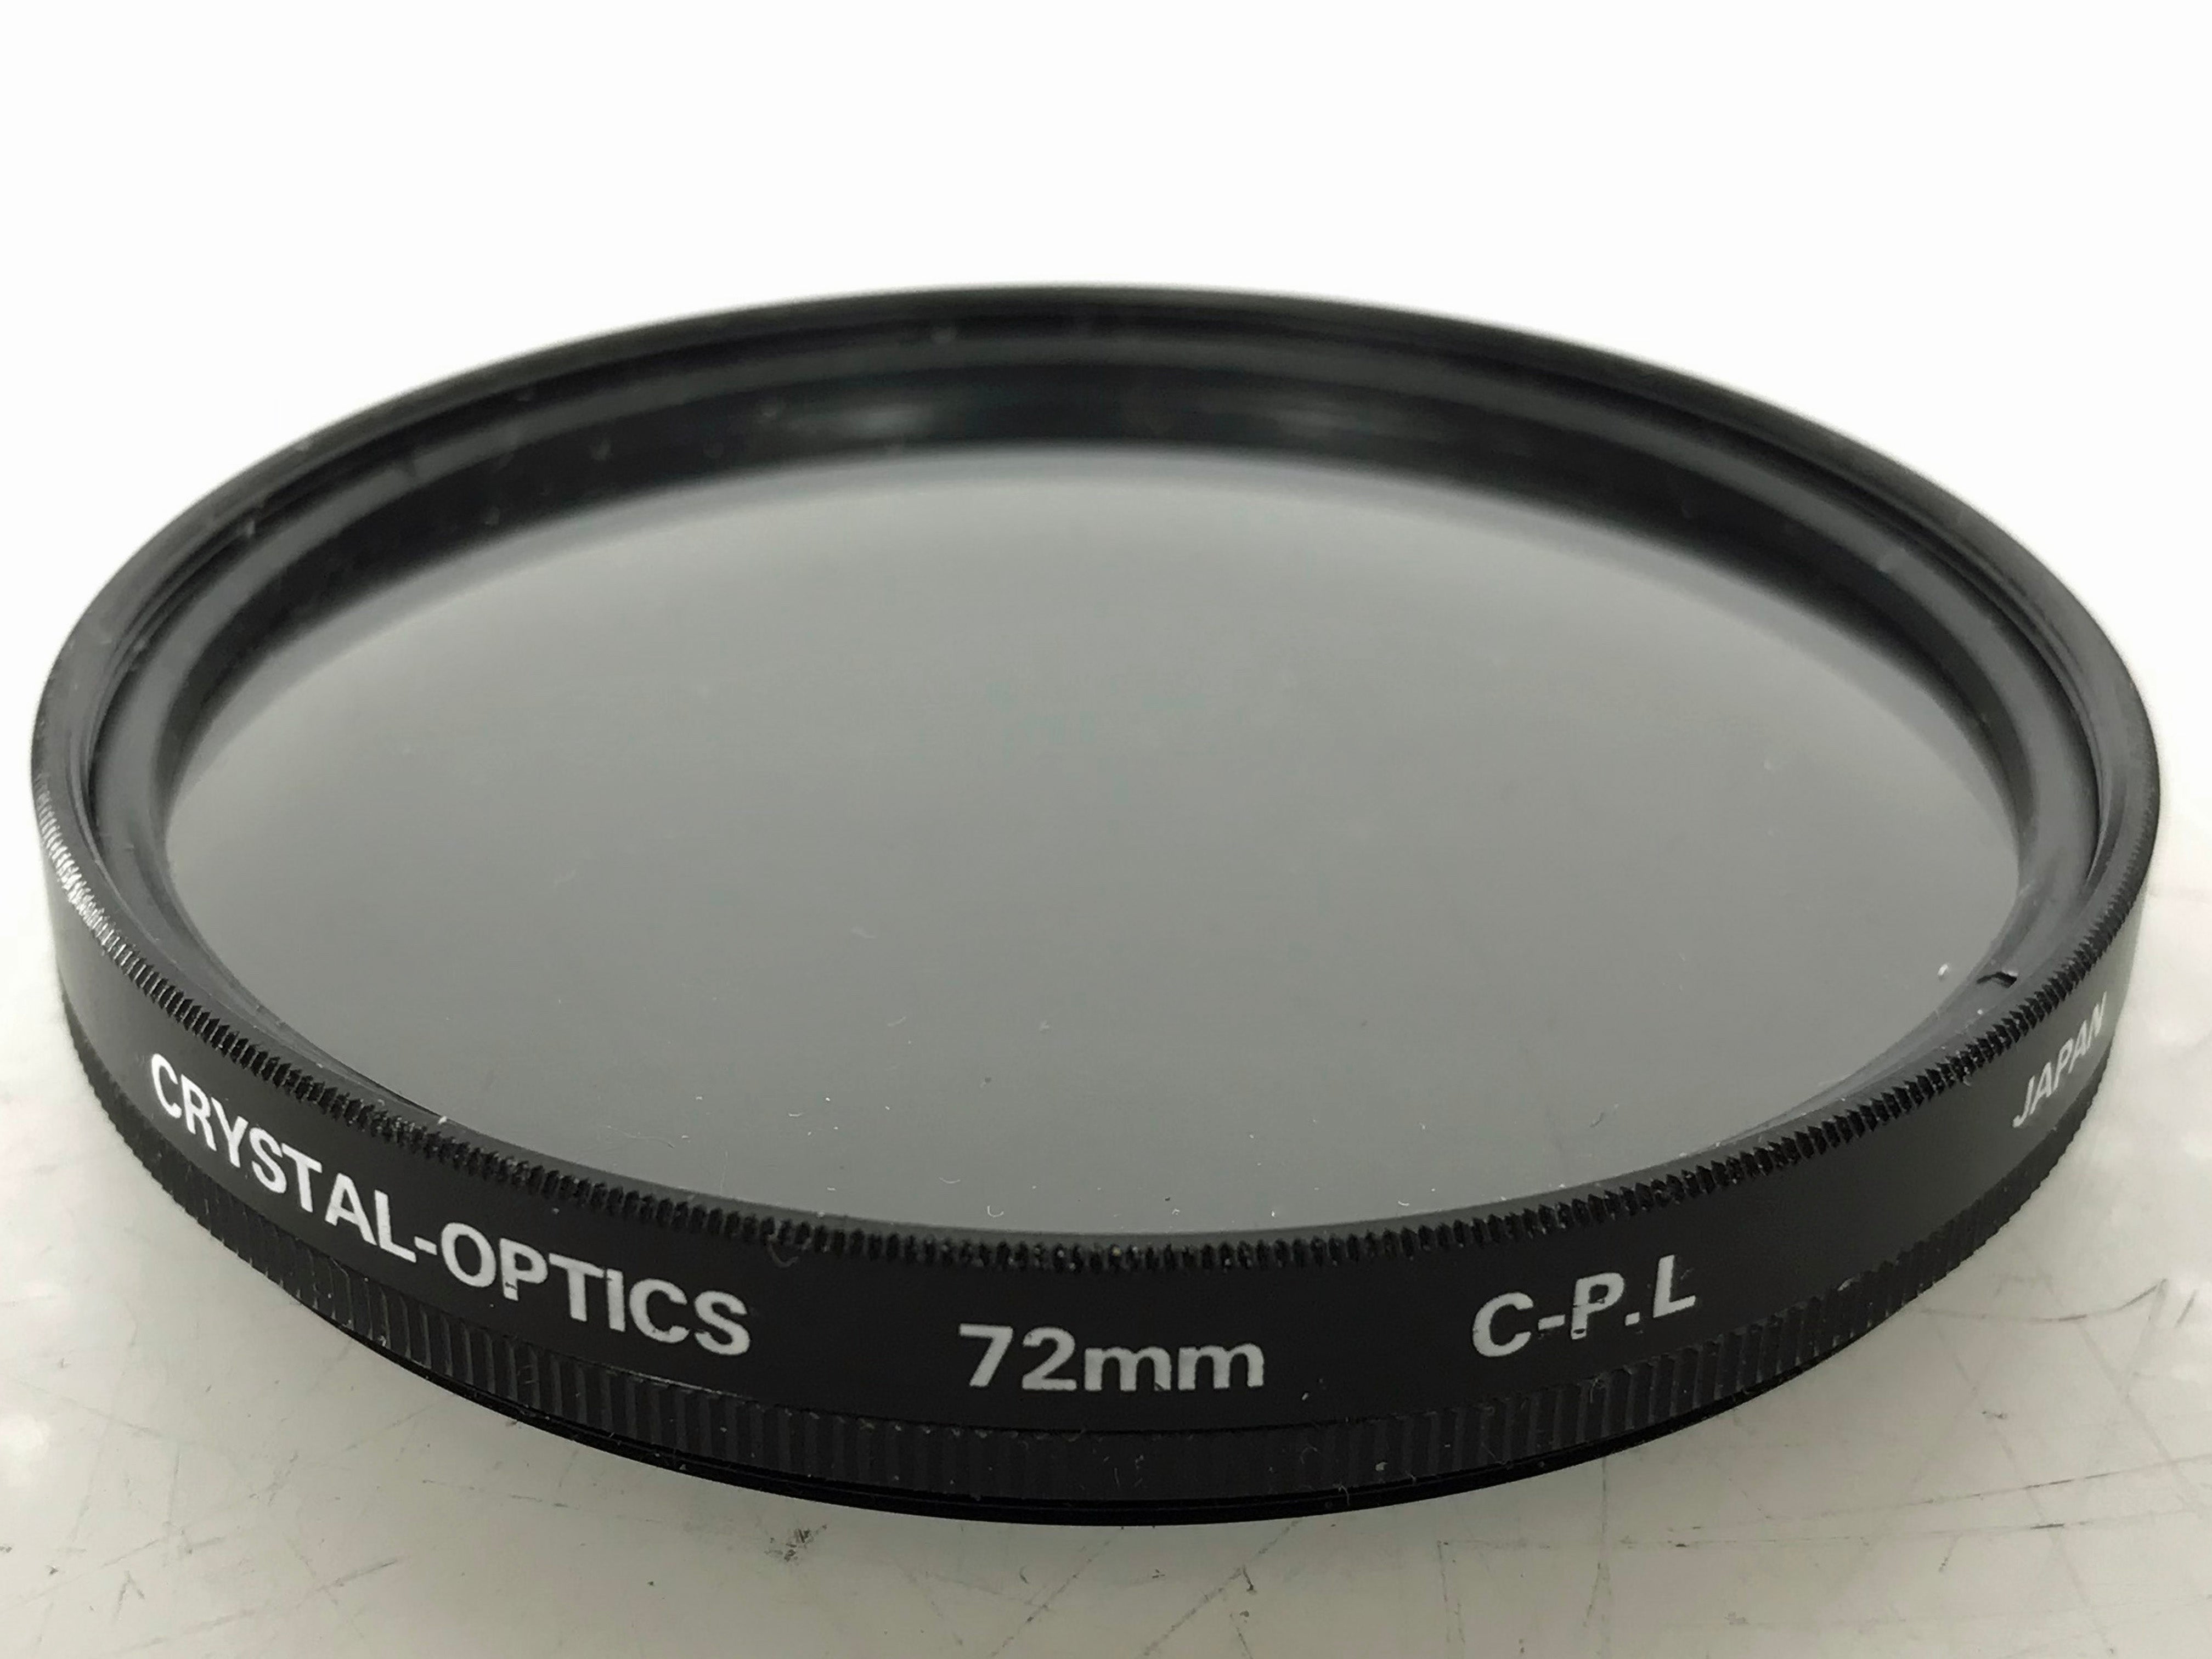 Crystal-Optics 72mm CPL Circular Polarizer Filter